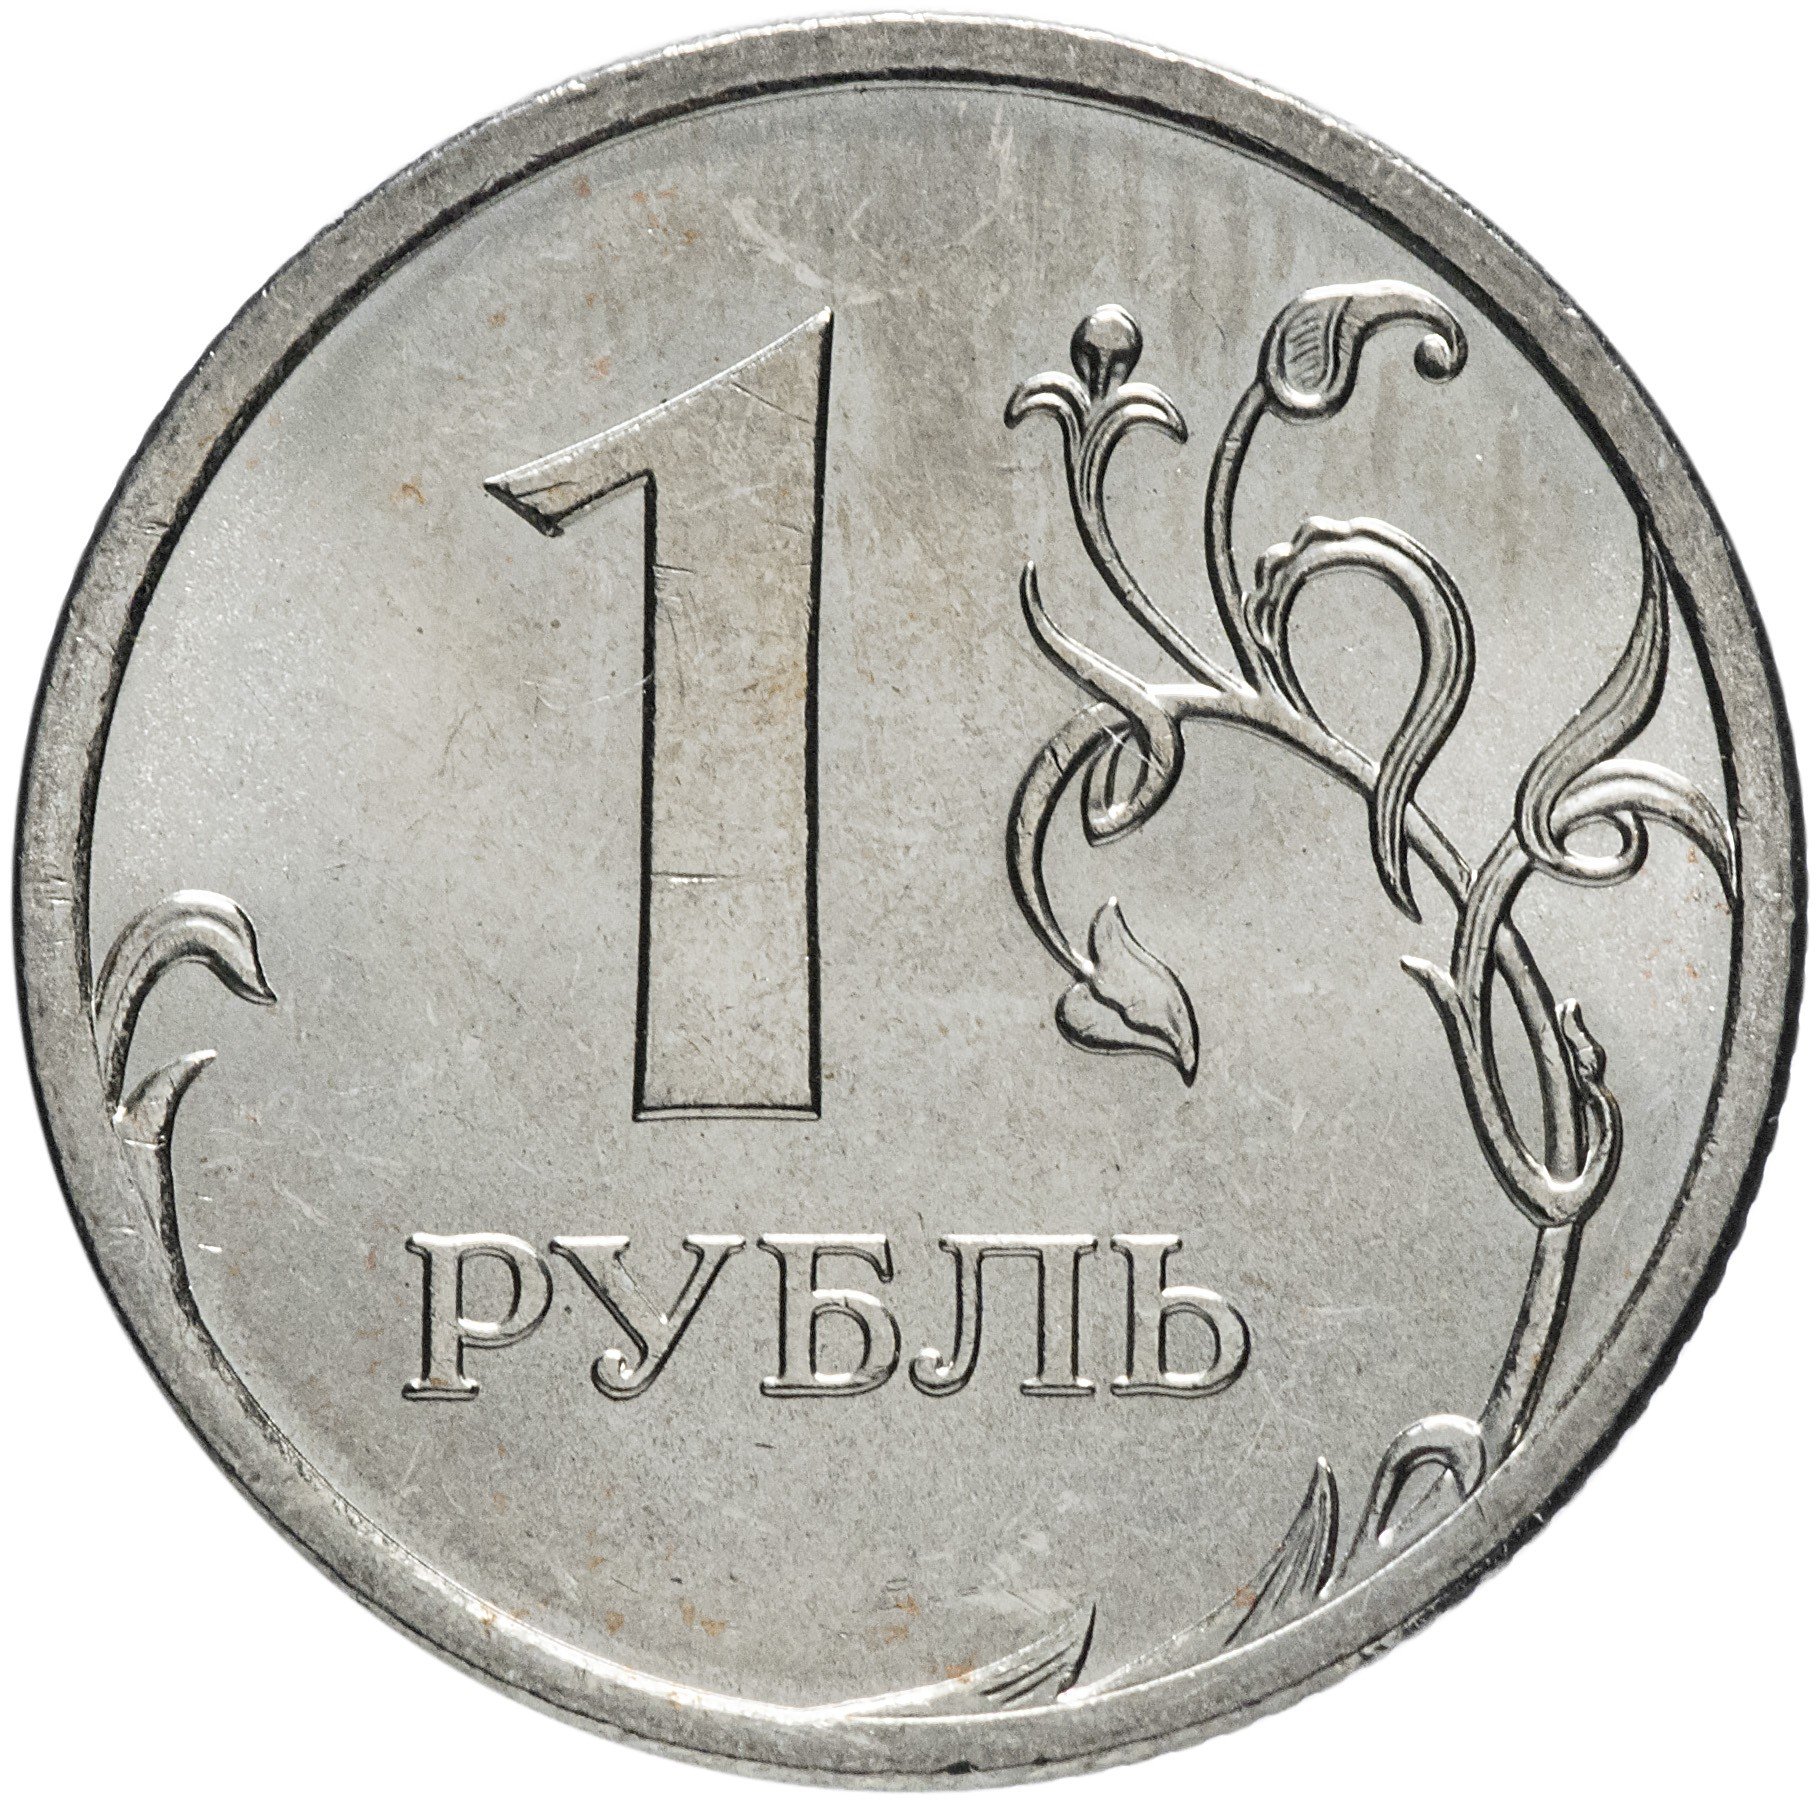 На рубле без руб. Монета 1 рубль 2014. Монета 1рубль 2014 года с буквой р перевертыш. Символ рубля. Изображение рубля.